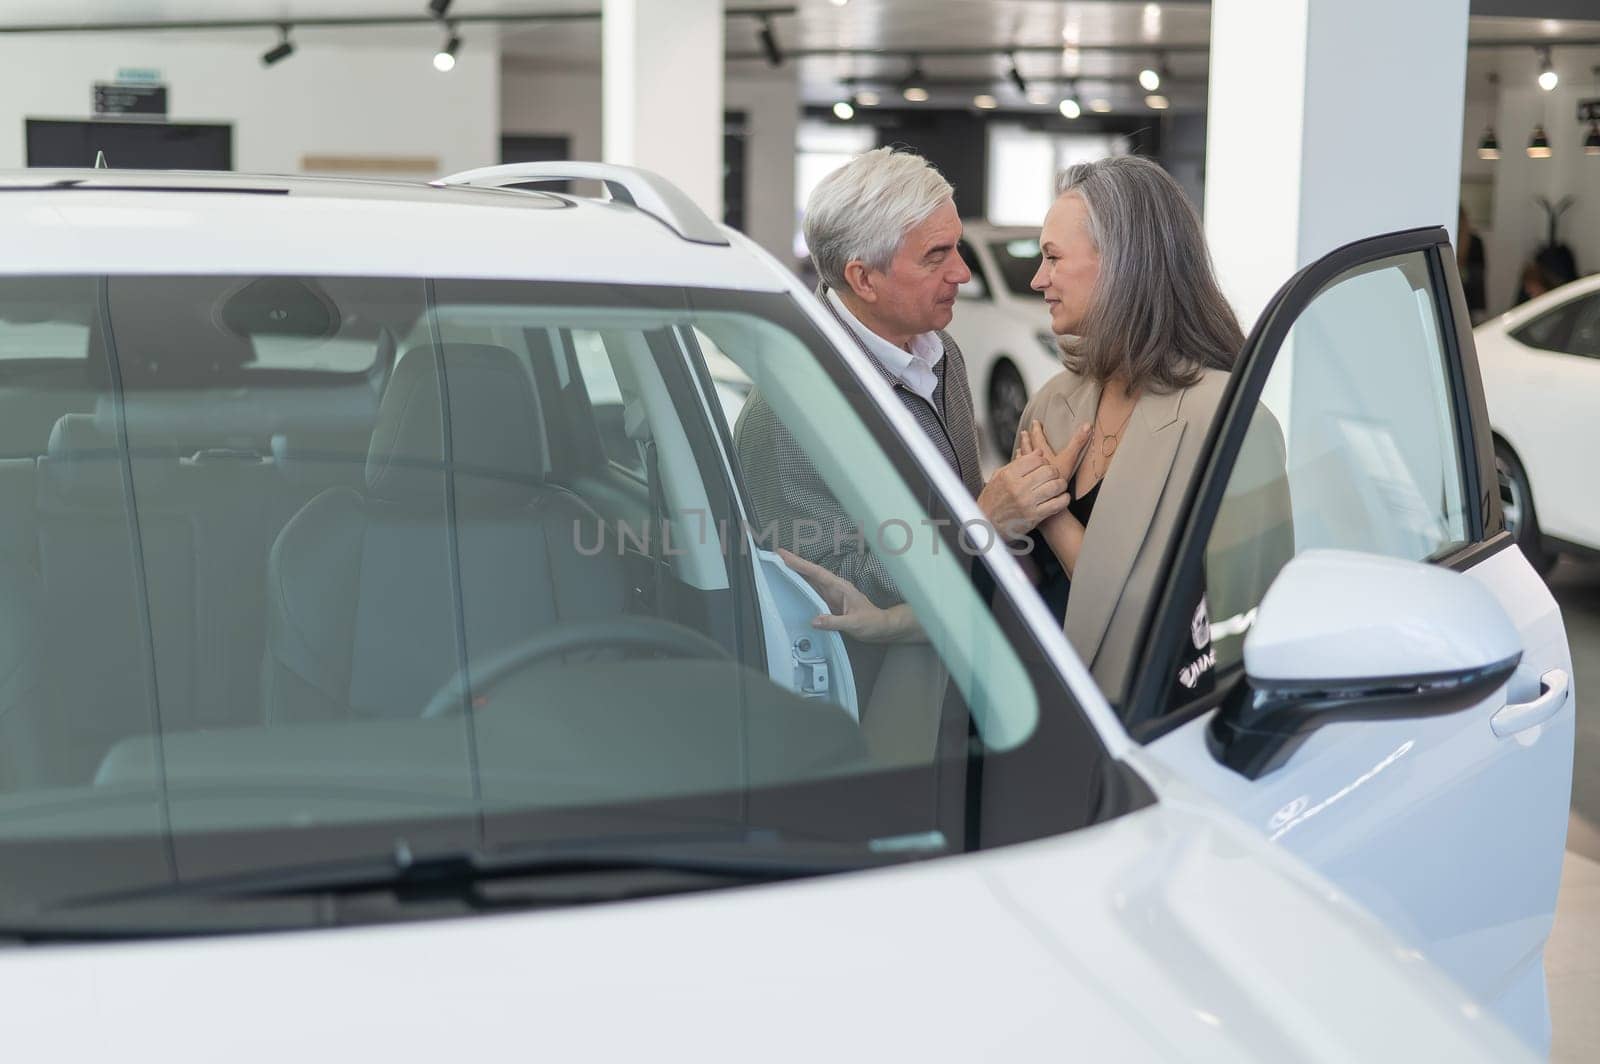 An elderly Caucasian couple chooses a new car at a car dealership